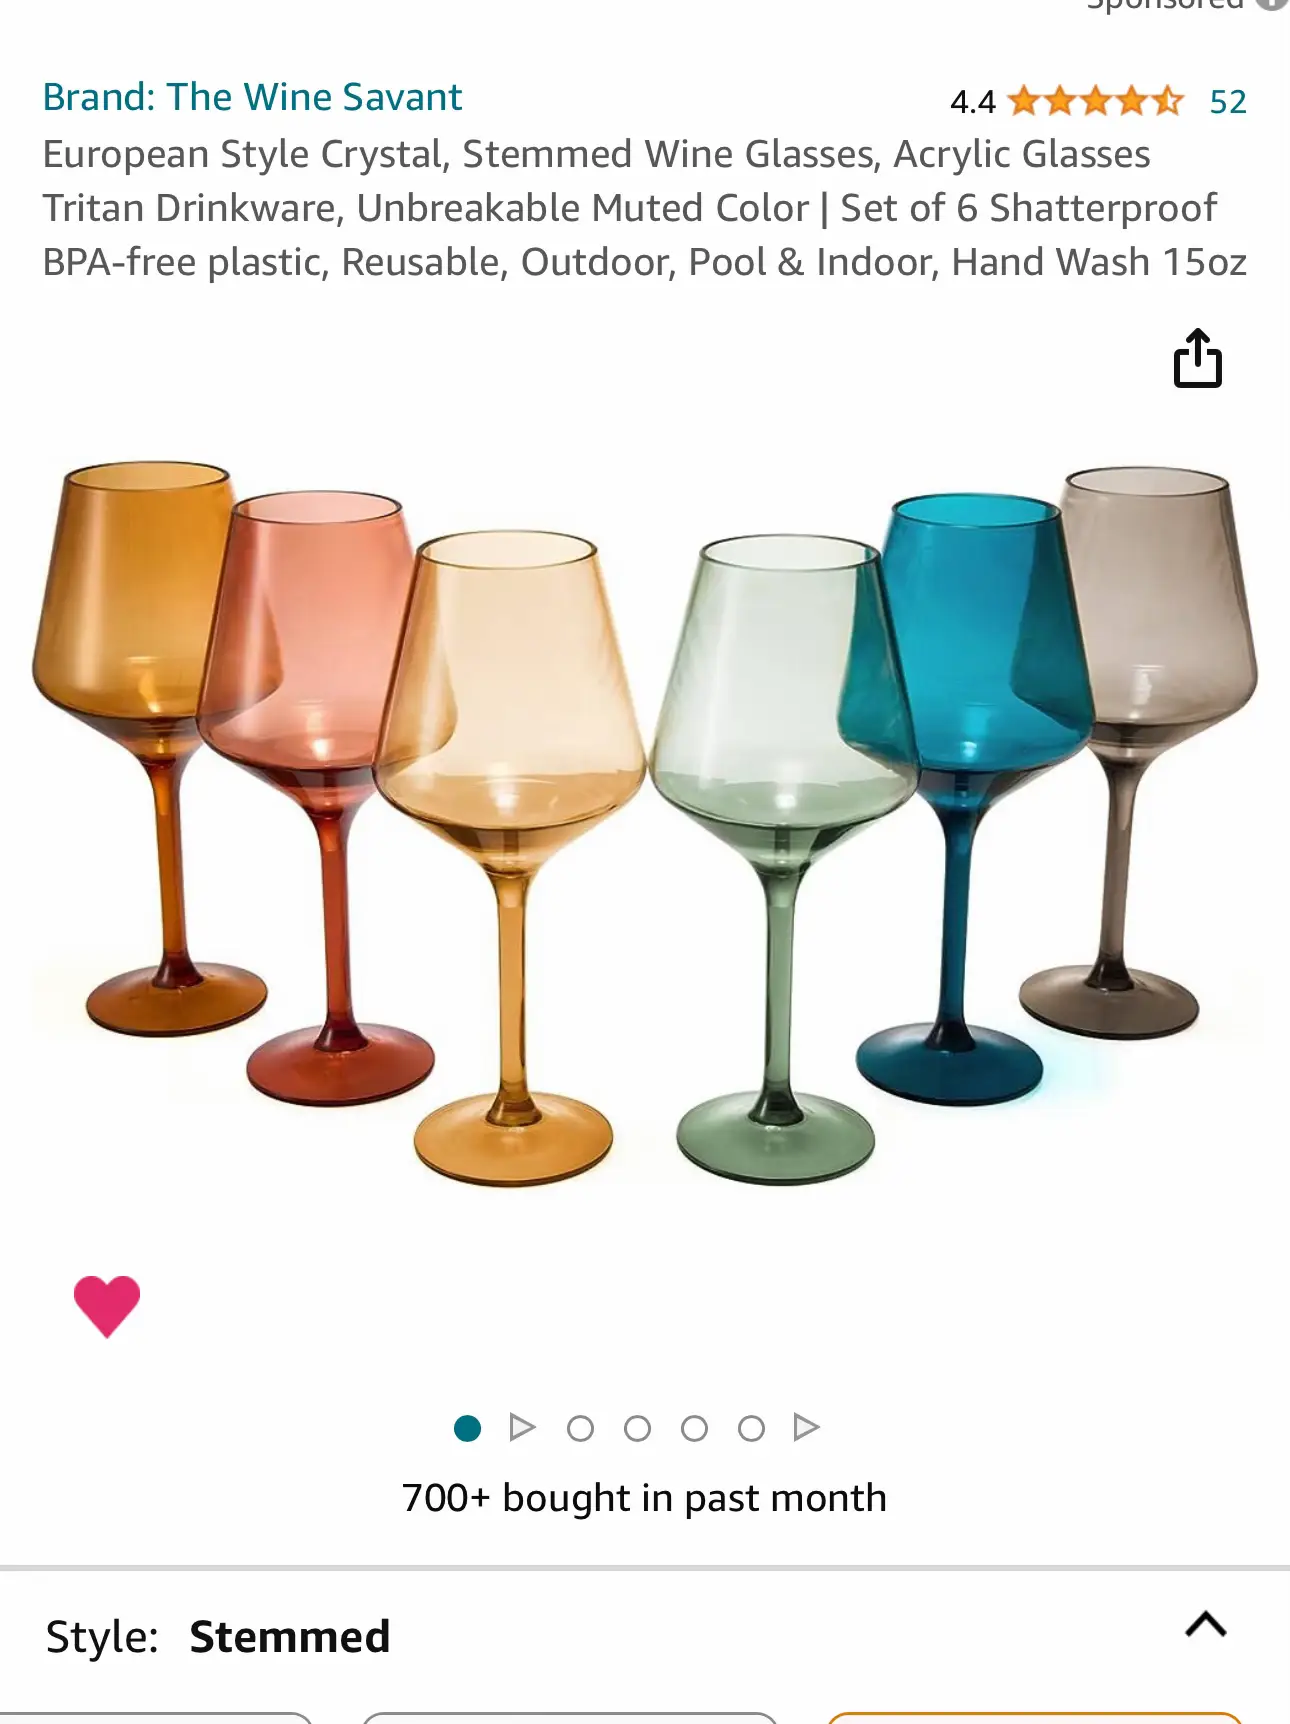 European Style Crystal, Stemmed Wine Glasses, Acrylic Glasses Tritan Drinkware, Unbreakable Muted Color | Set of 6 | Shatterproof BPA-Free Plastic